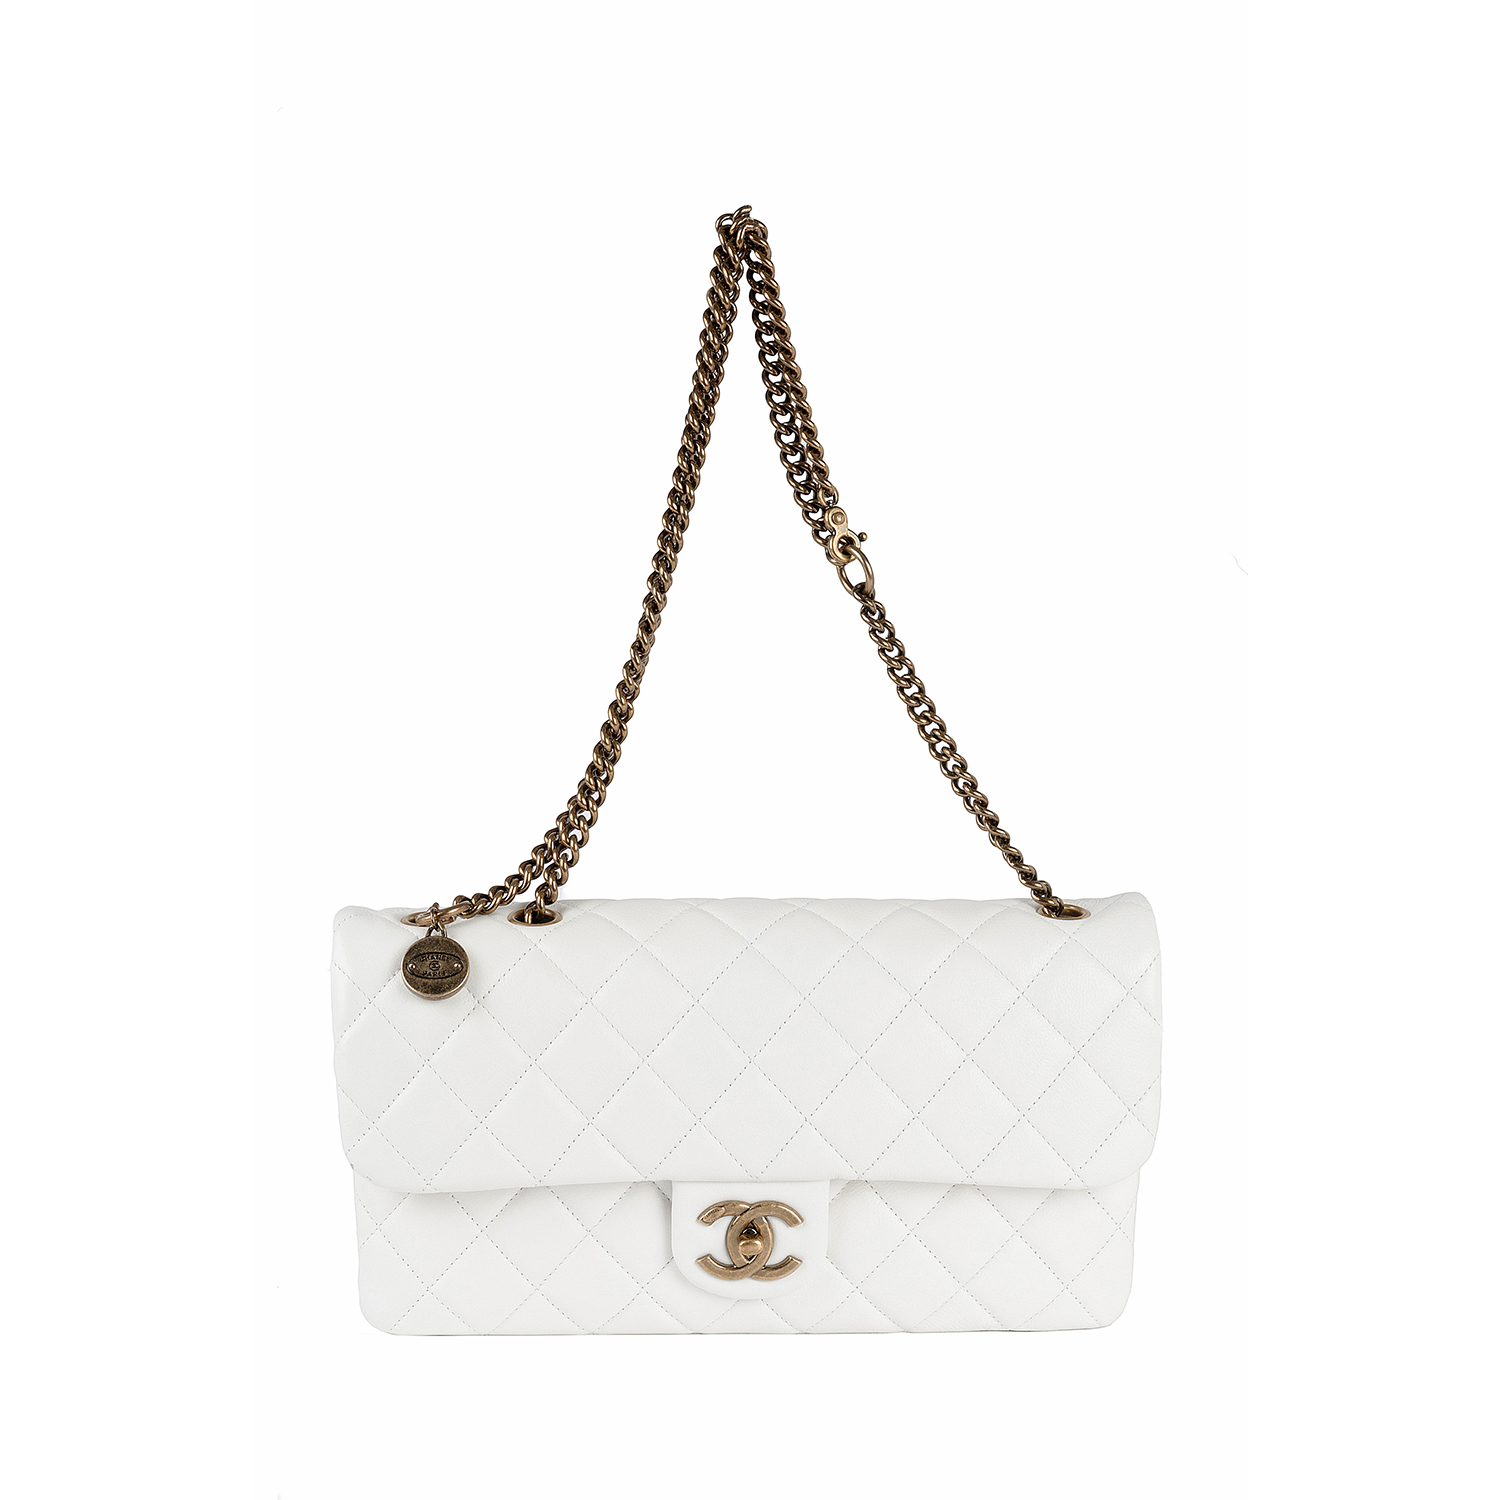 Handbag for rent Chanel Reissue 255  Rent Fashion Bag